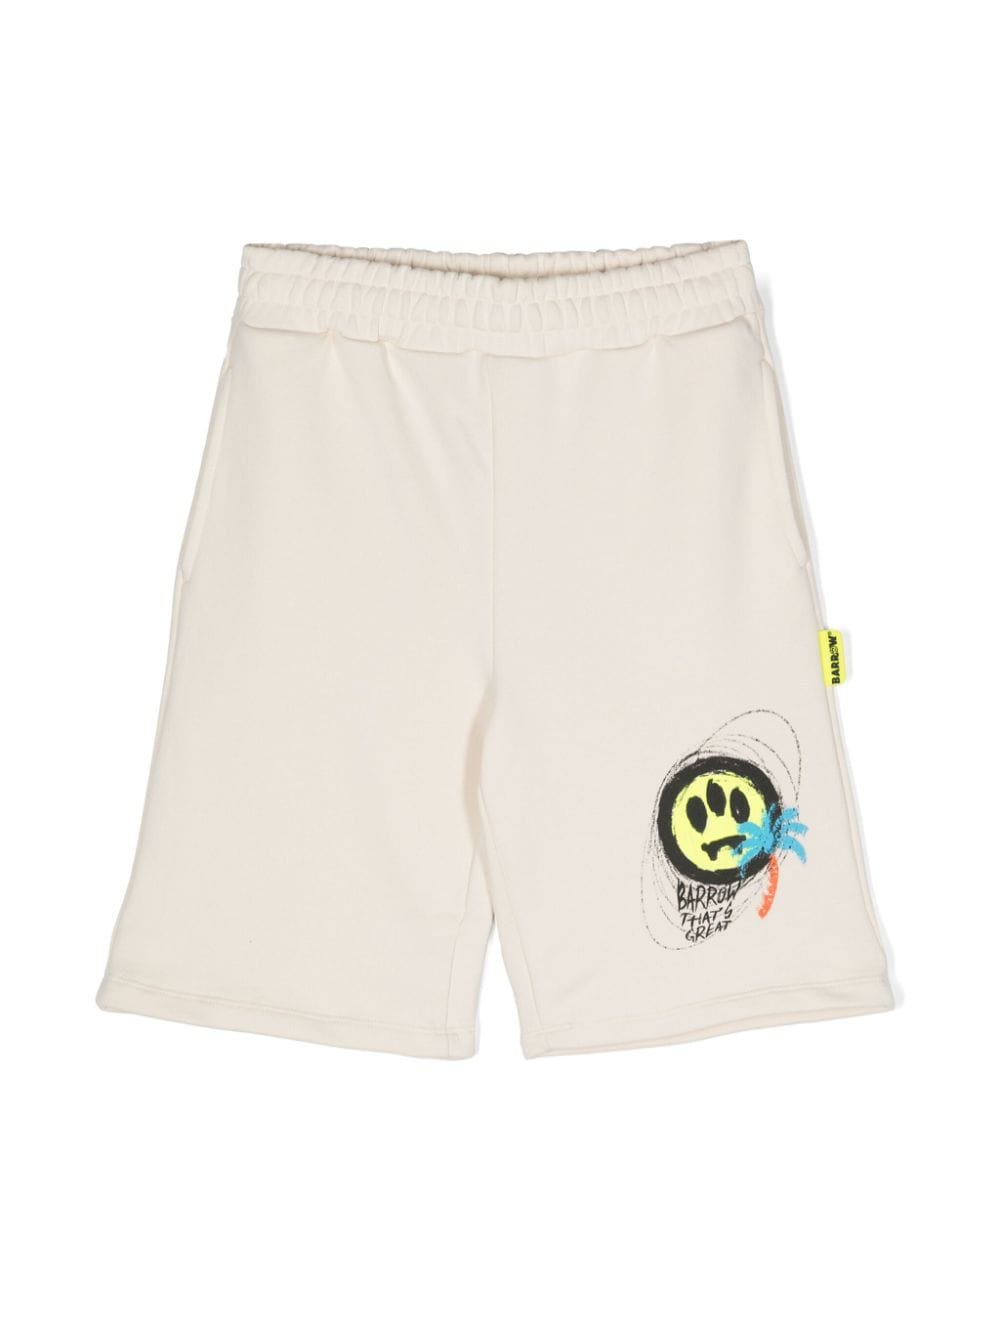 Cream Bermuda shorts for boys with logo